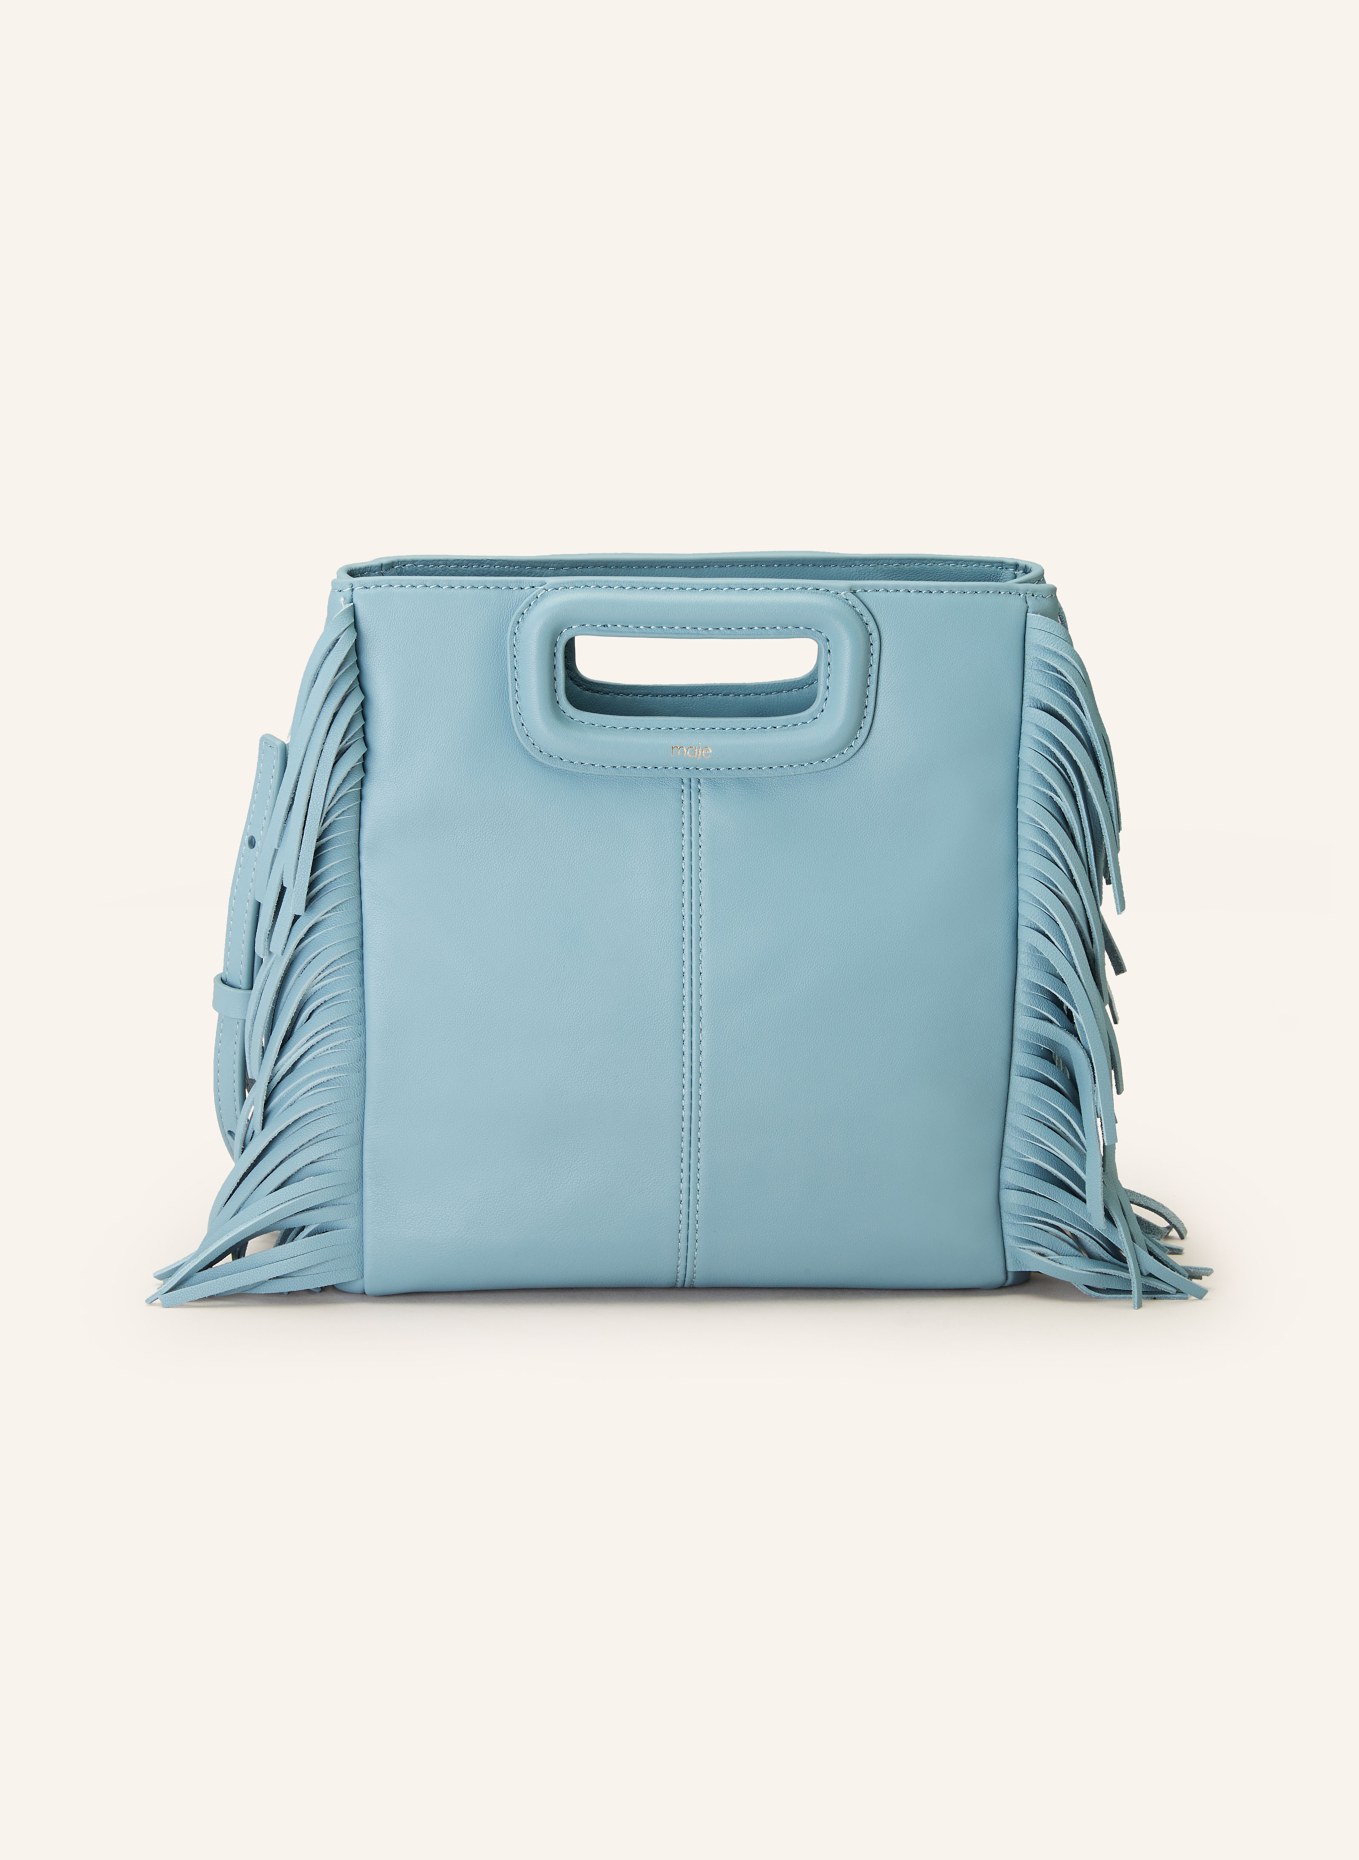 maje Handtasche, Farbe: BLAUGRAU (Bild 1)